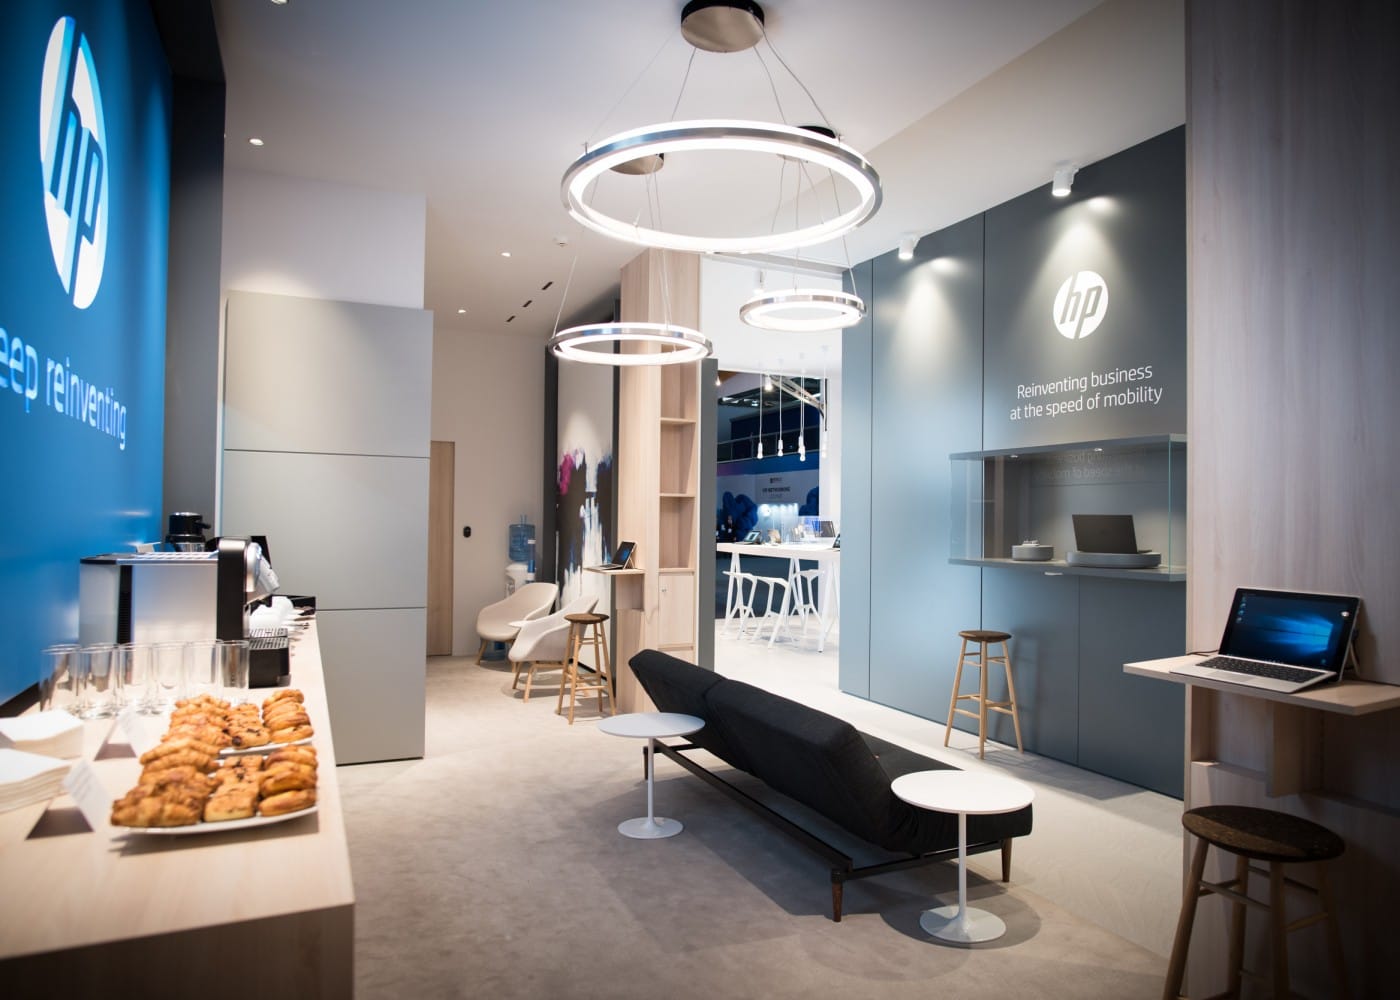 retail lighting design: Barcelona HP booth